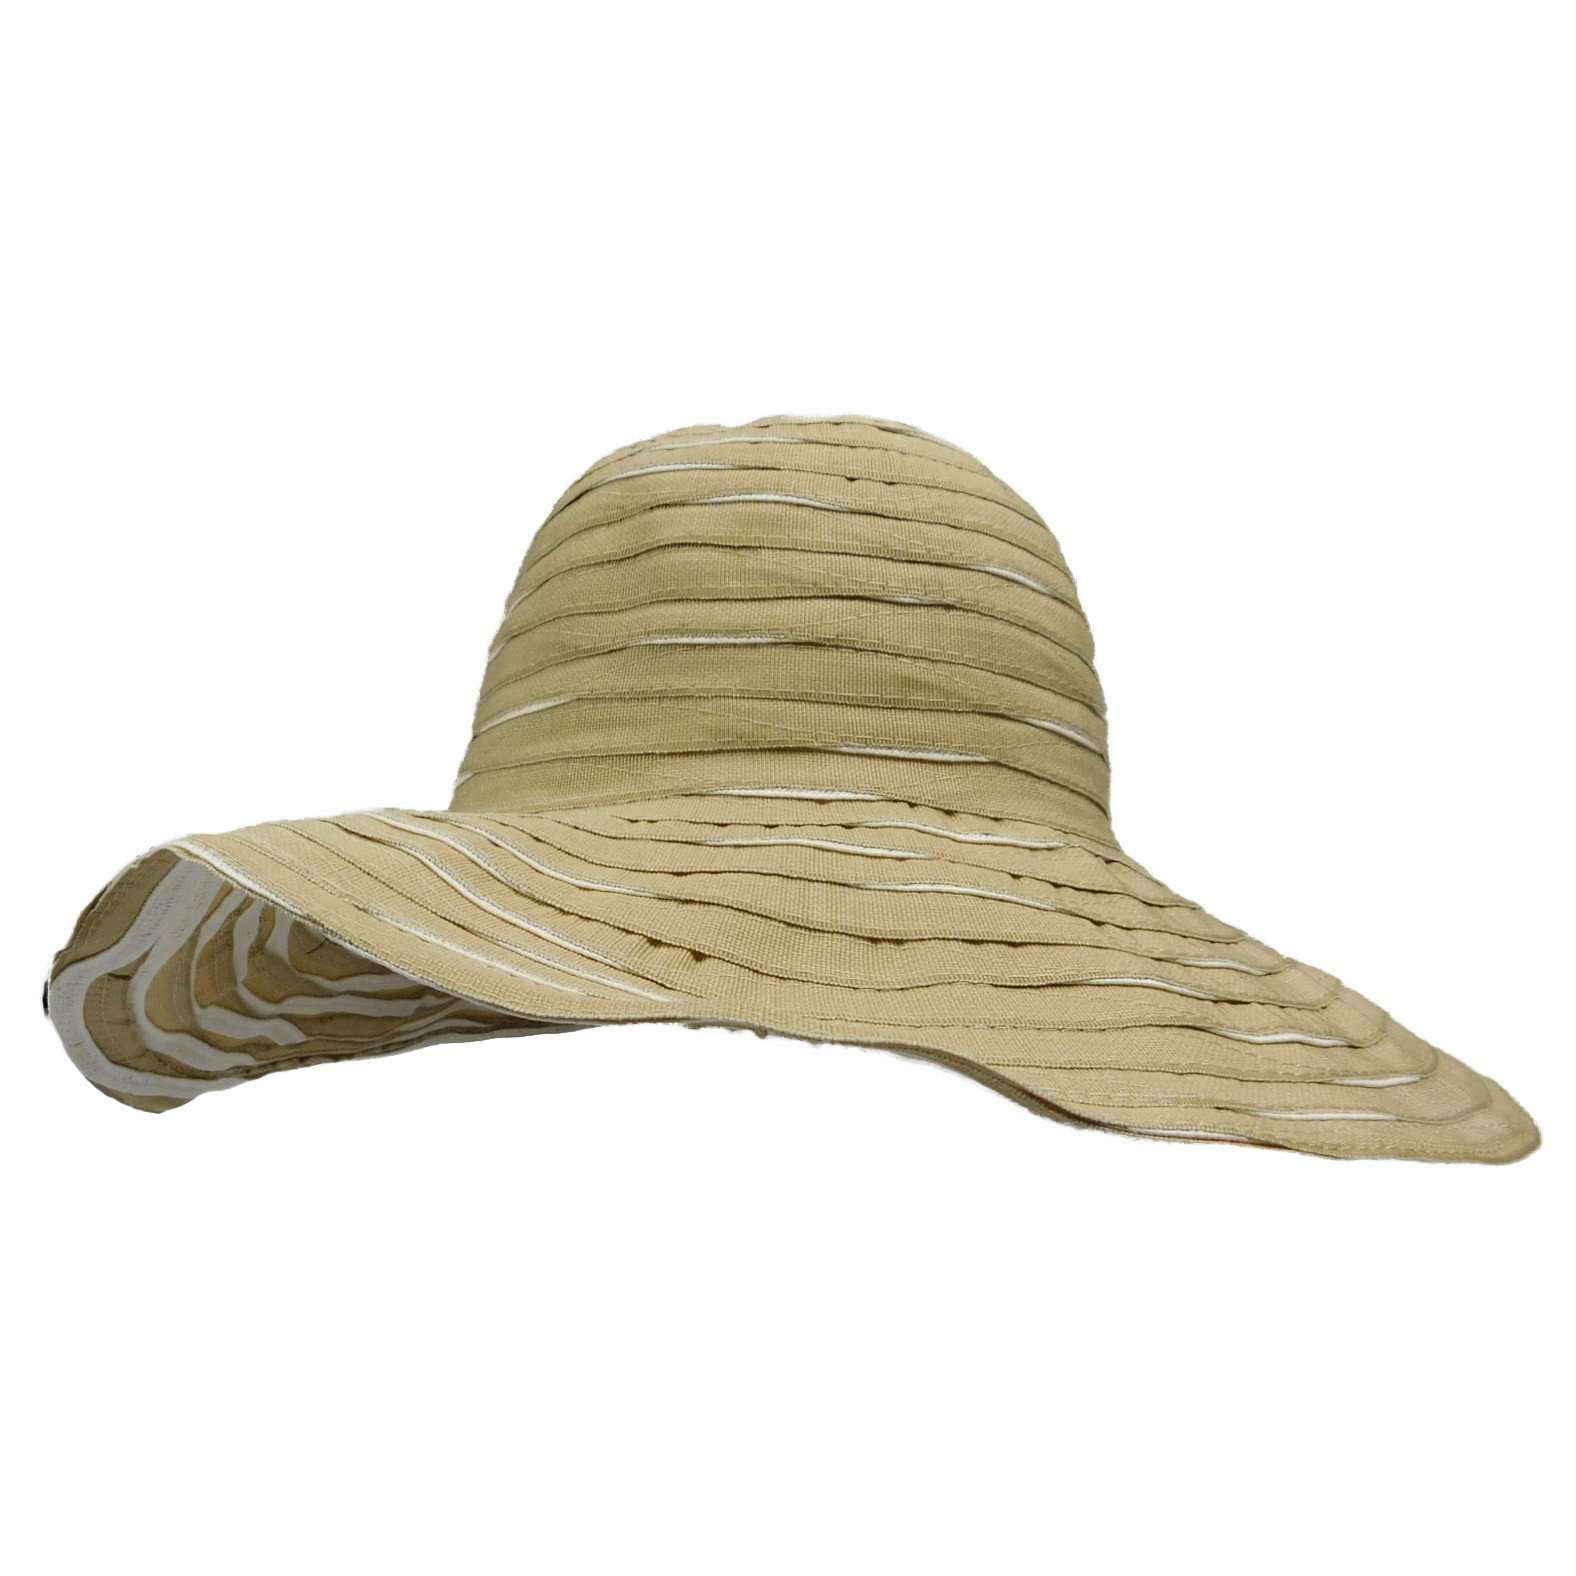 Spring Summer Hats Women Floral Sun Hat Womens Beach Garden Pool Packable 4.5 Wide Brim Chin Strap Cotton Floppy Sunhat for Women